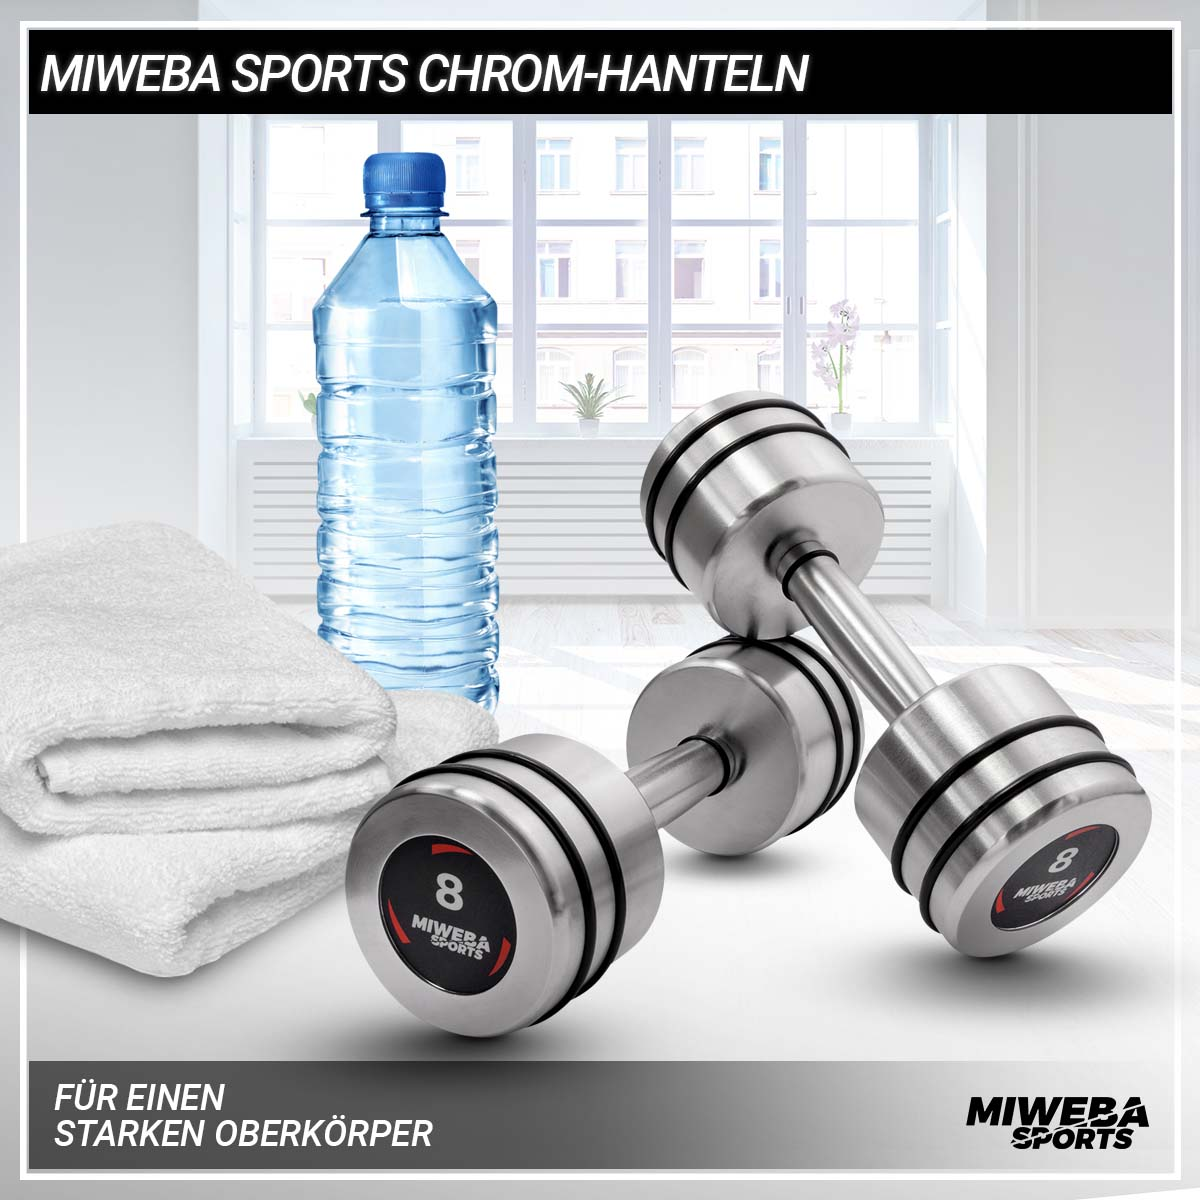 MIWEBA SPORTS Fitnesszubehör Chrom Matt silber Kurzhanteln, 8.0 2x kg Hanteln